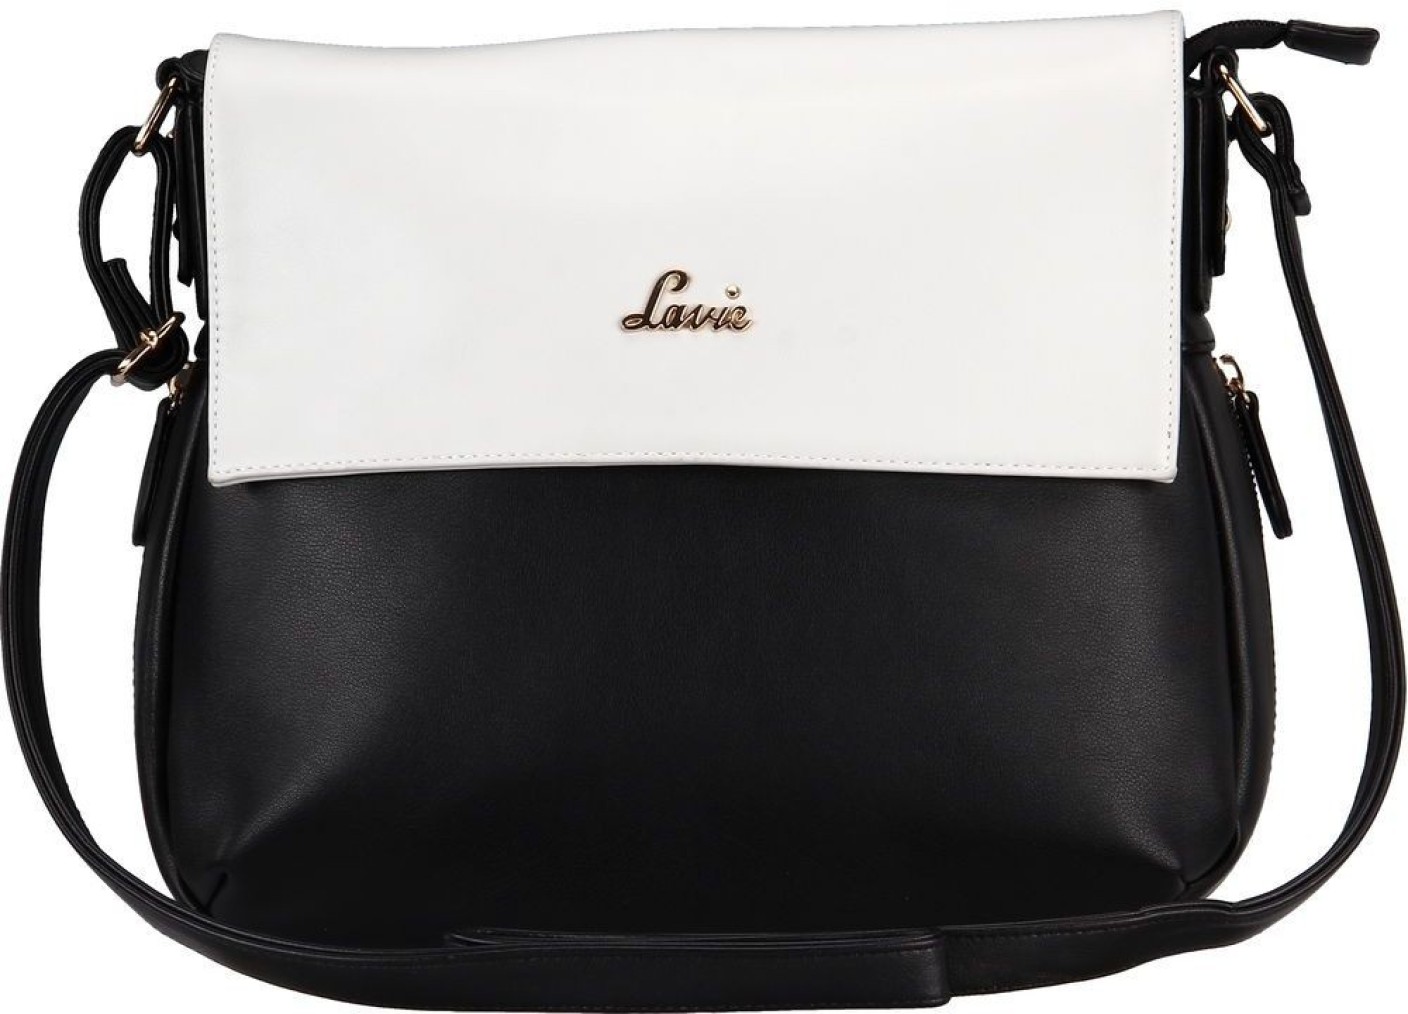 Buy Lavie Sling Bag Black Online @ Best Price in India ...